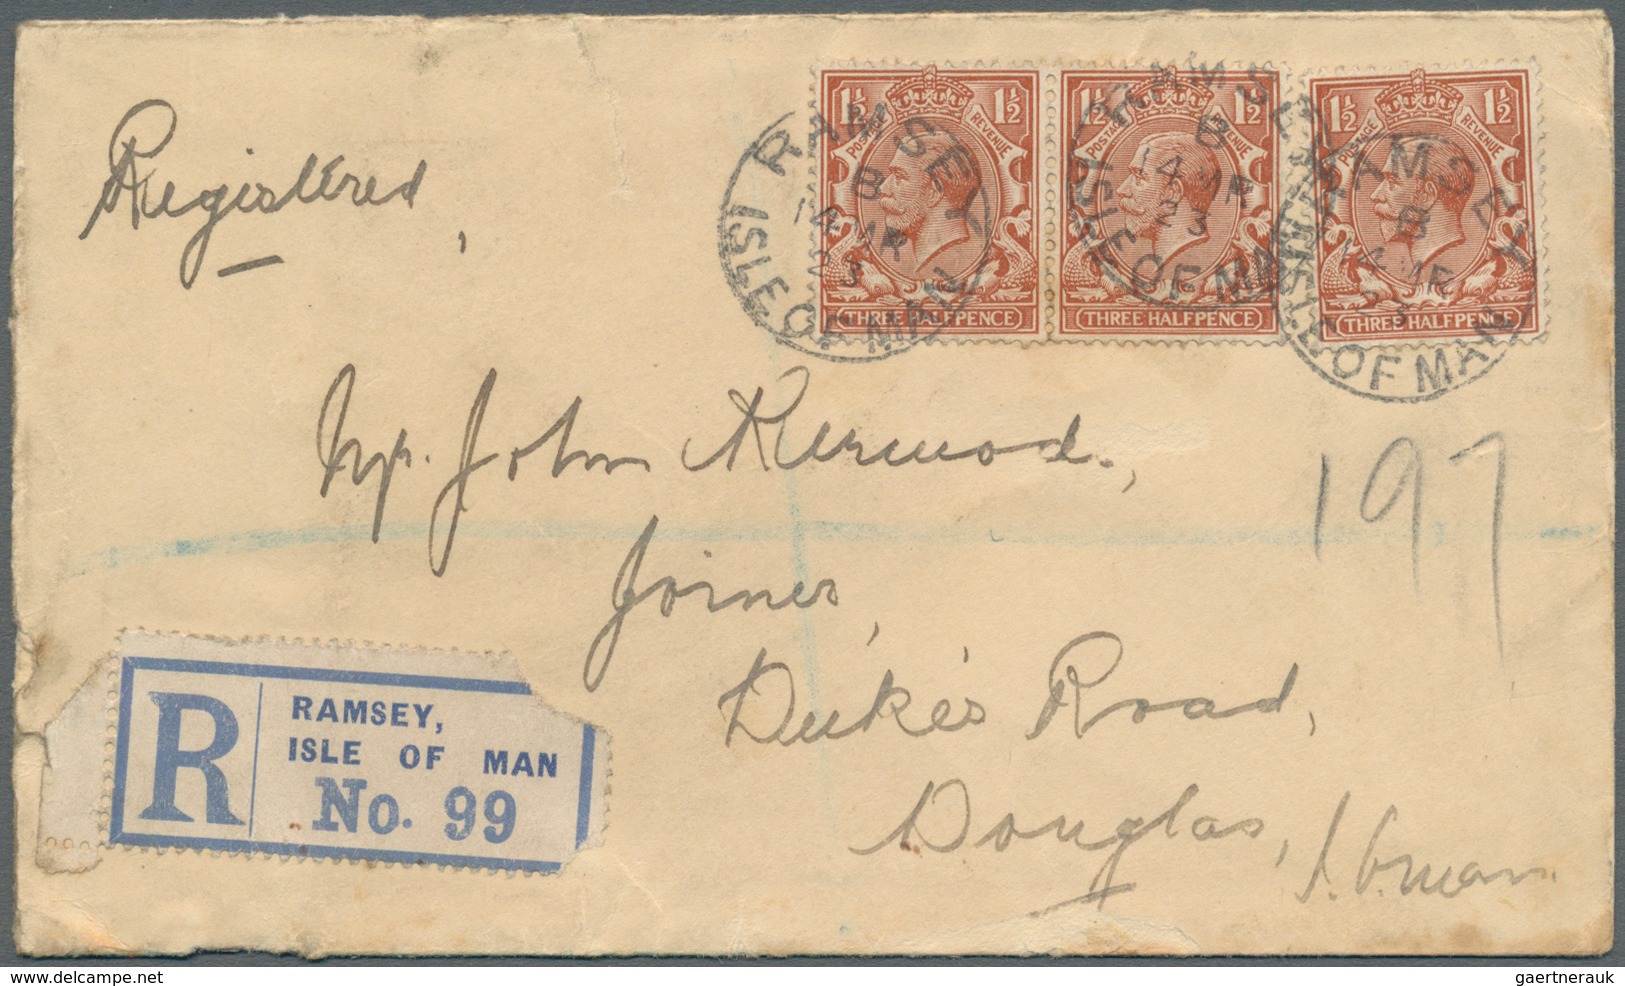 26762 Großbritannien - Isle of Man: 1852/1937: Very fine lot of 39 village postmarks on envelopes, picture